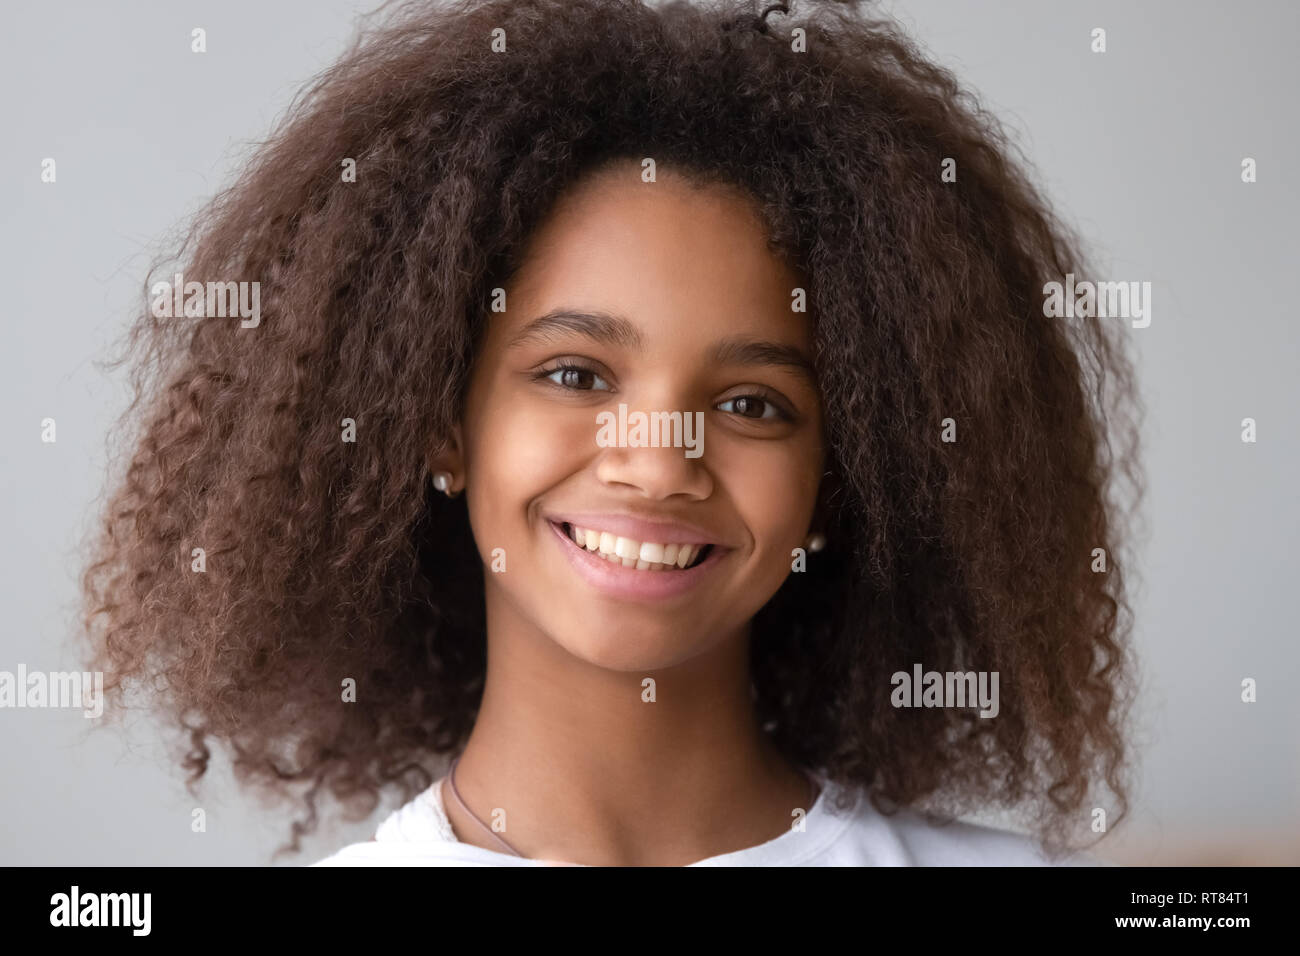 Attractive black teenager girl smiling looking at camera Stock Photo